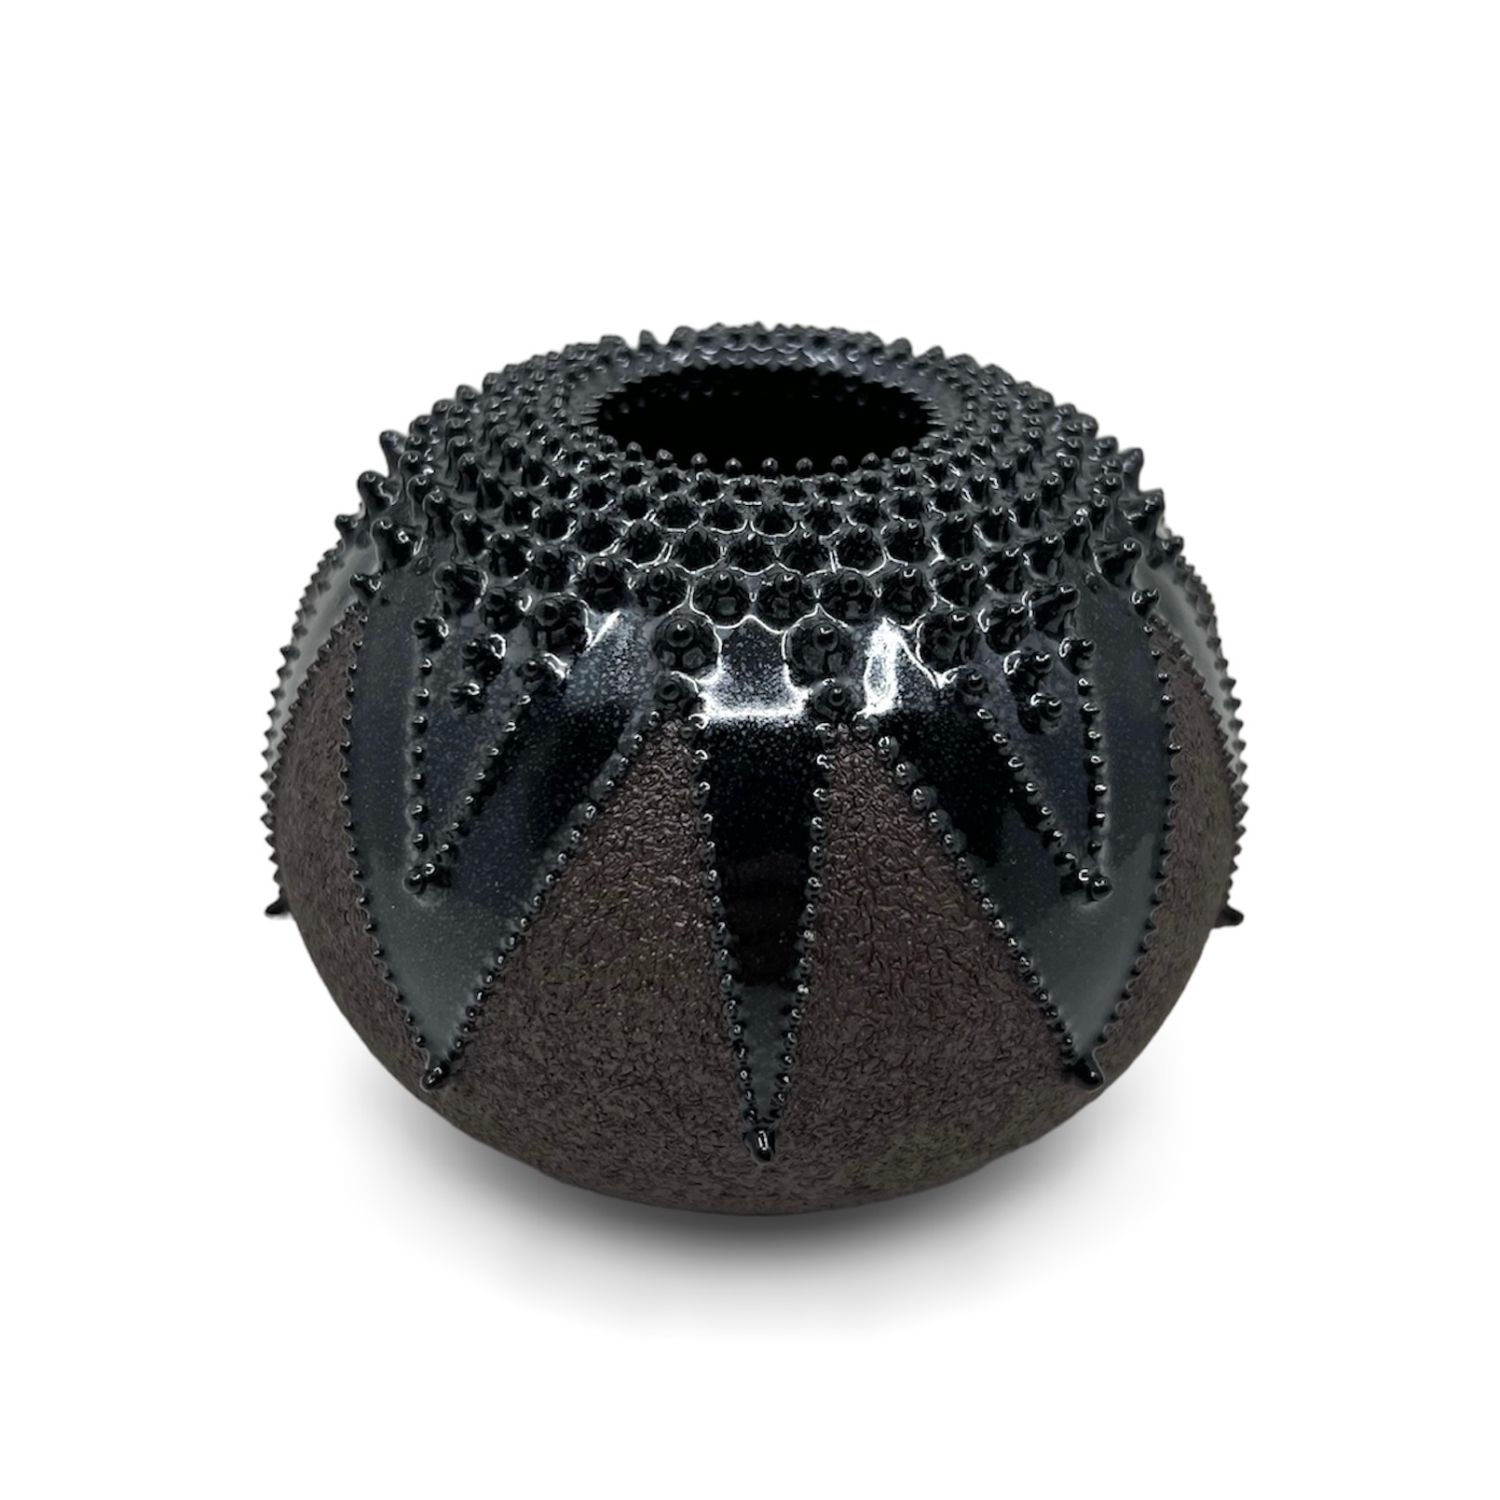 Zara Gardner: Black Urchin Sculpture Product Image 1 of 2